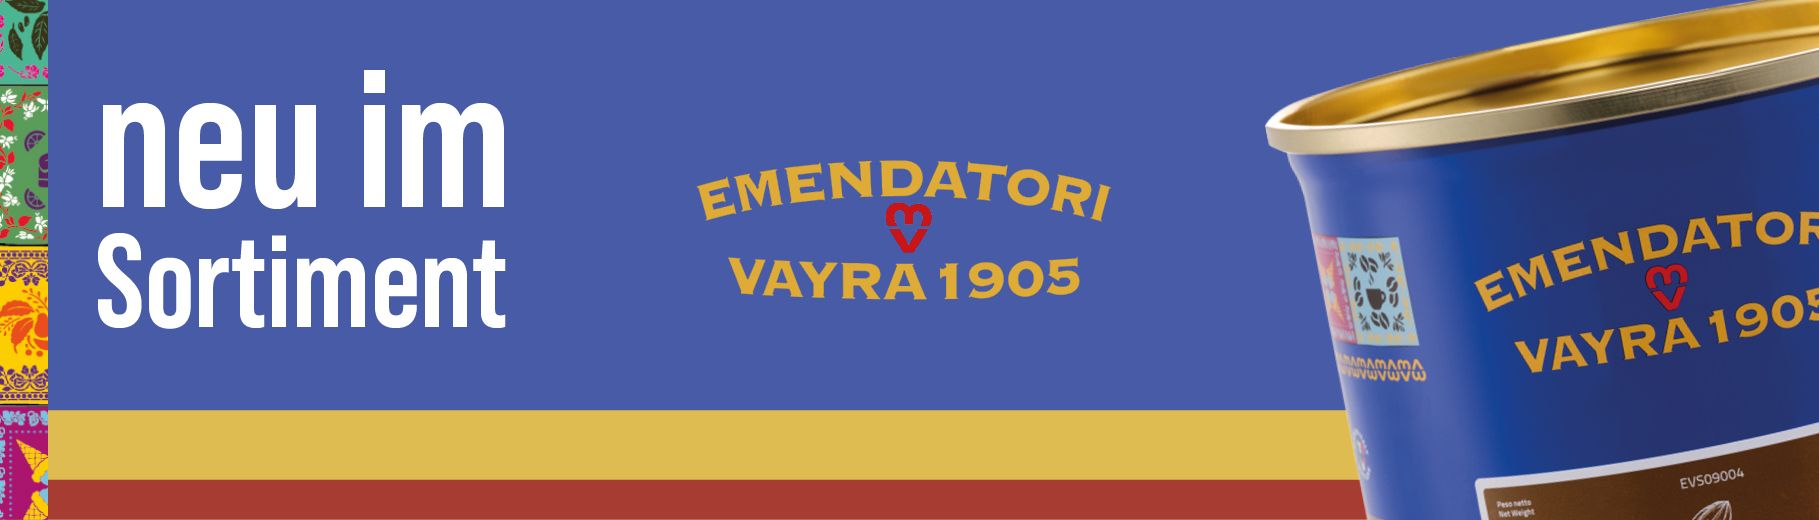 Neues Sortiment Emendatori Vayra 1905